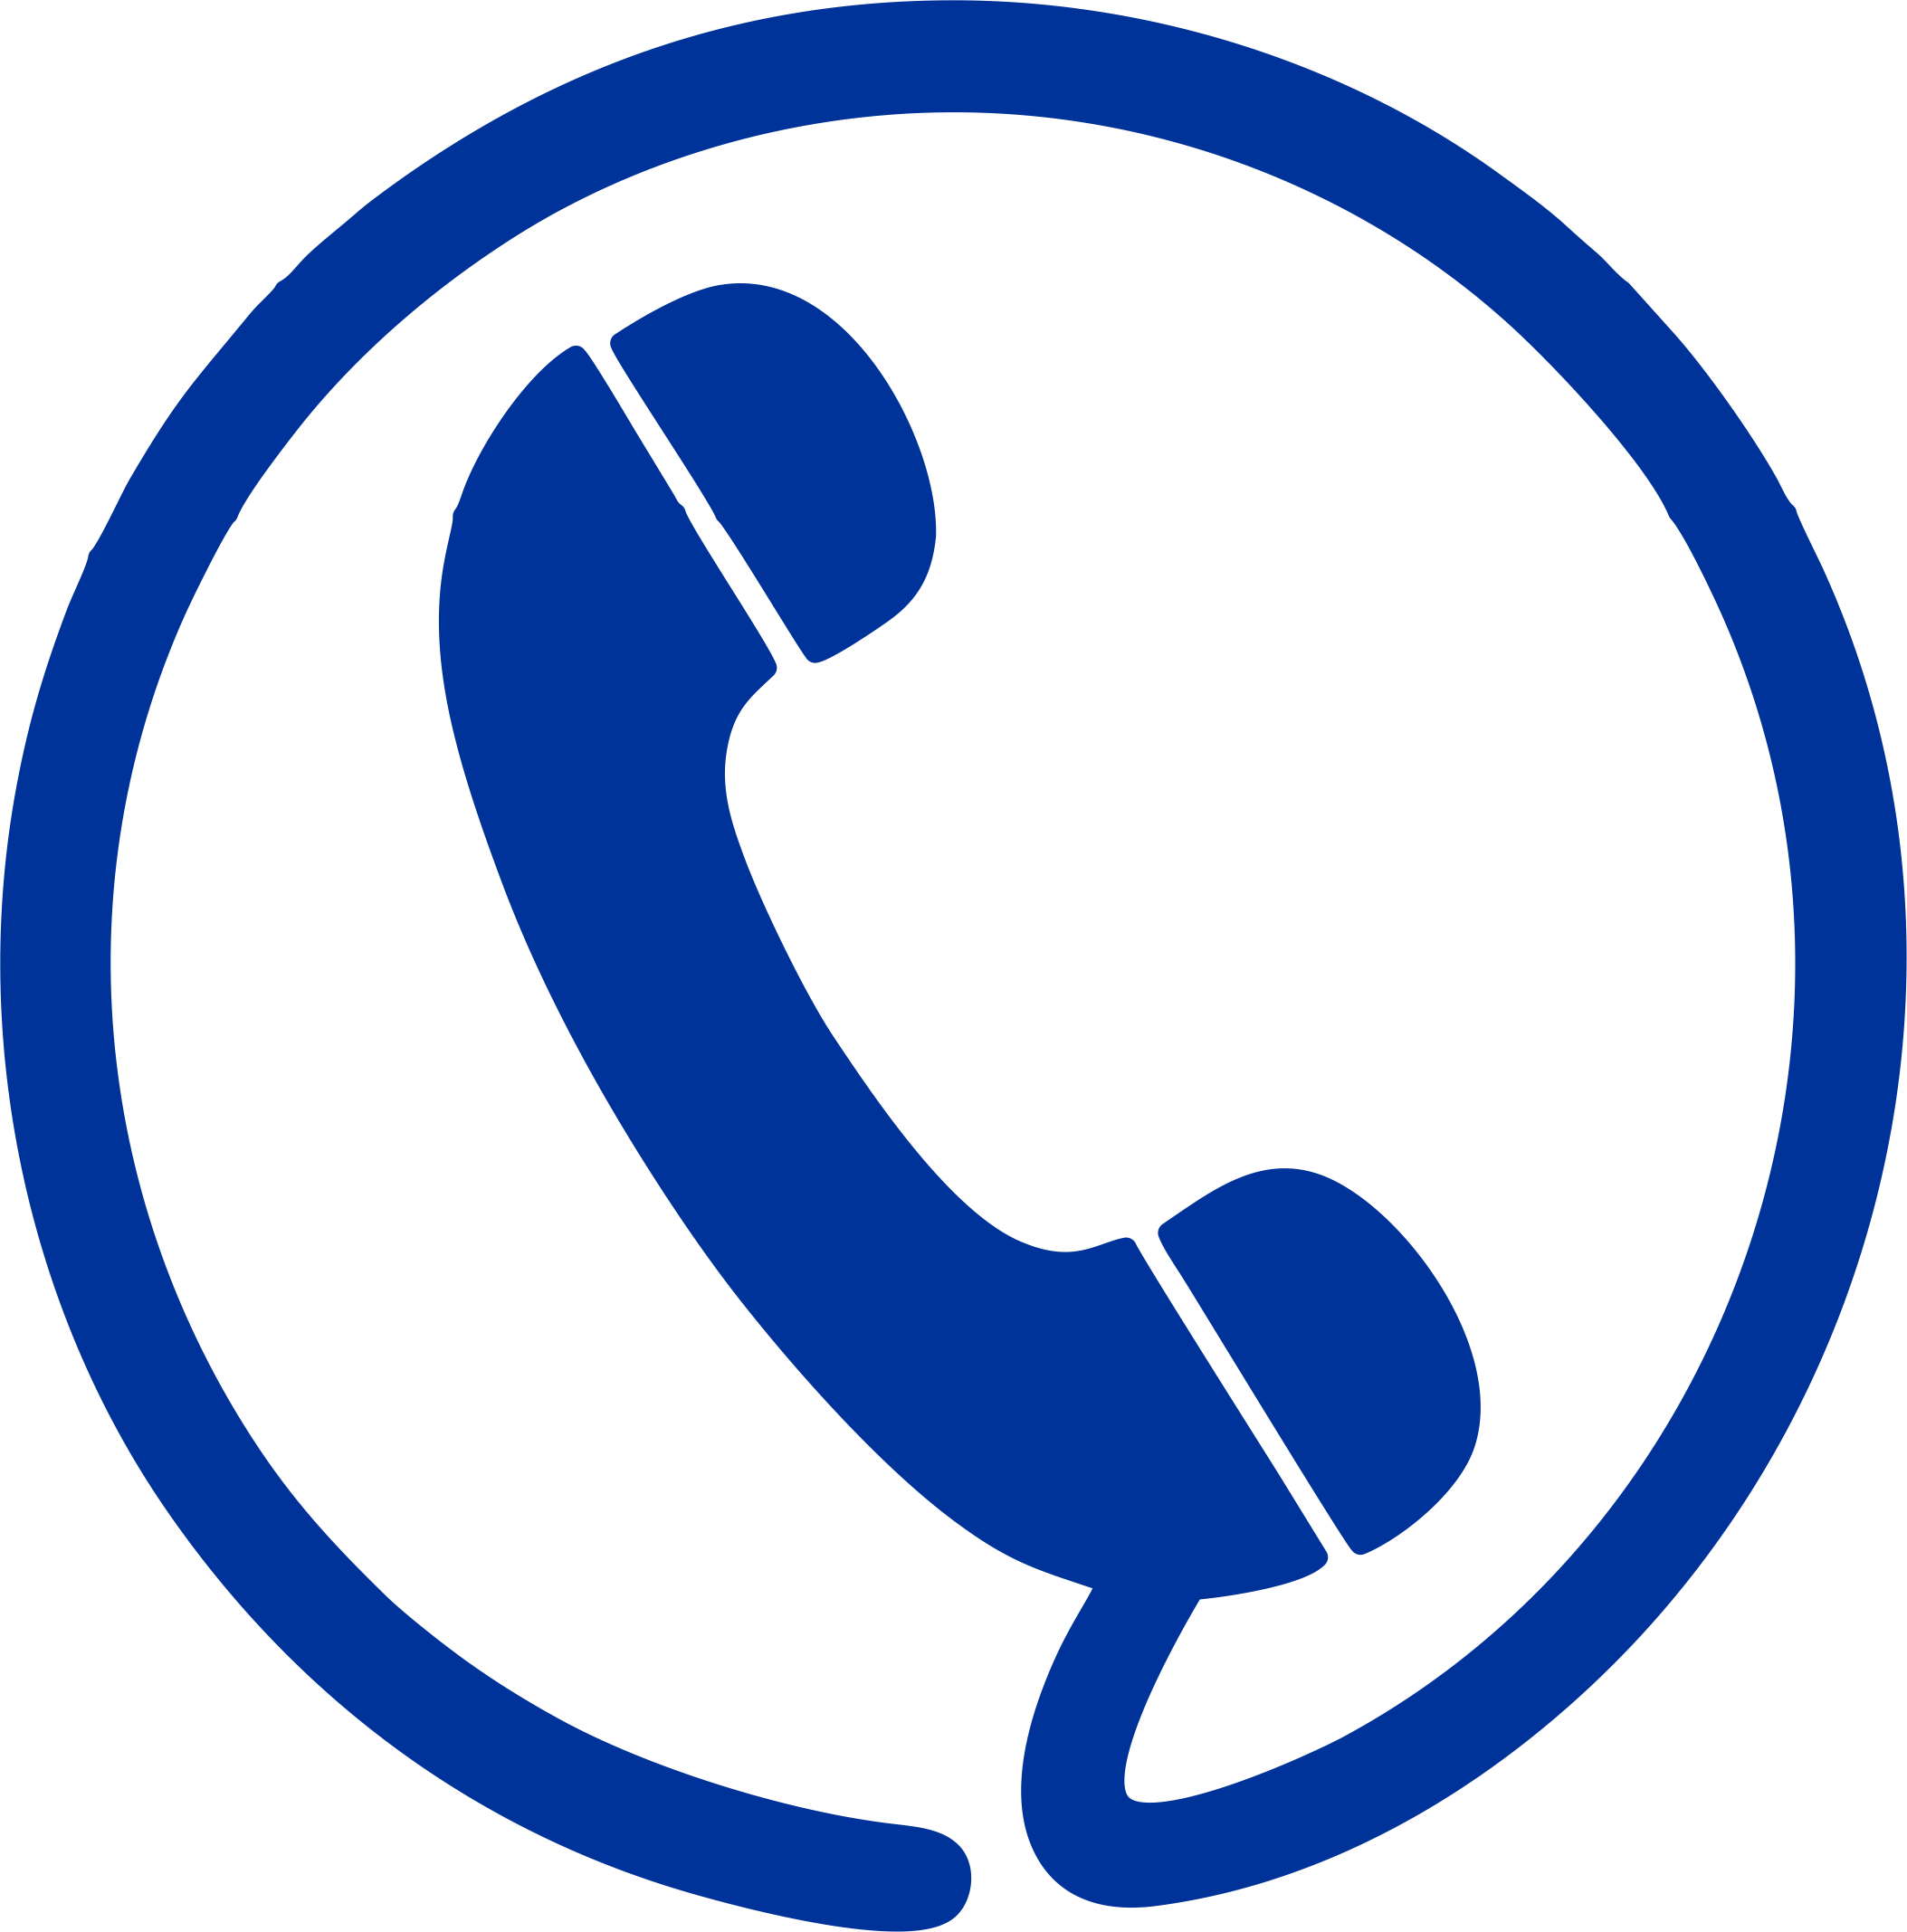 A Blue Phone Logo In A Circle